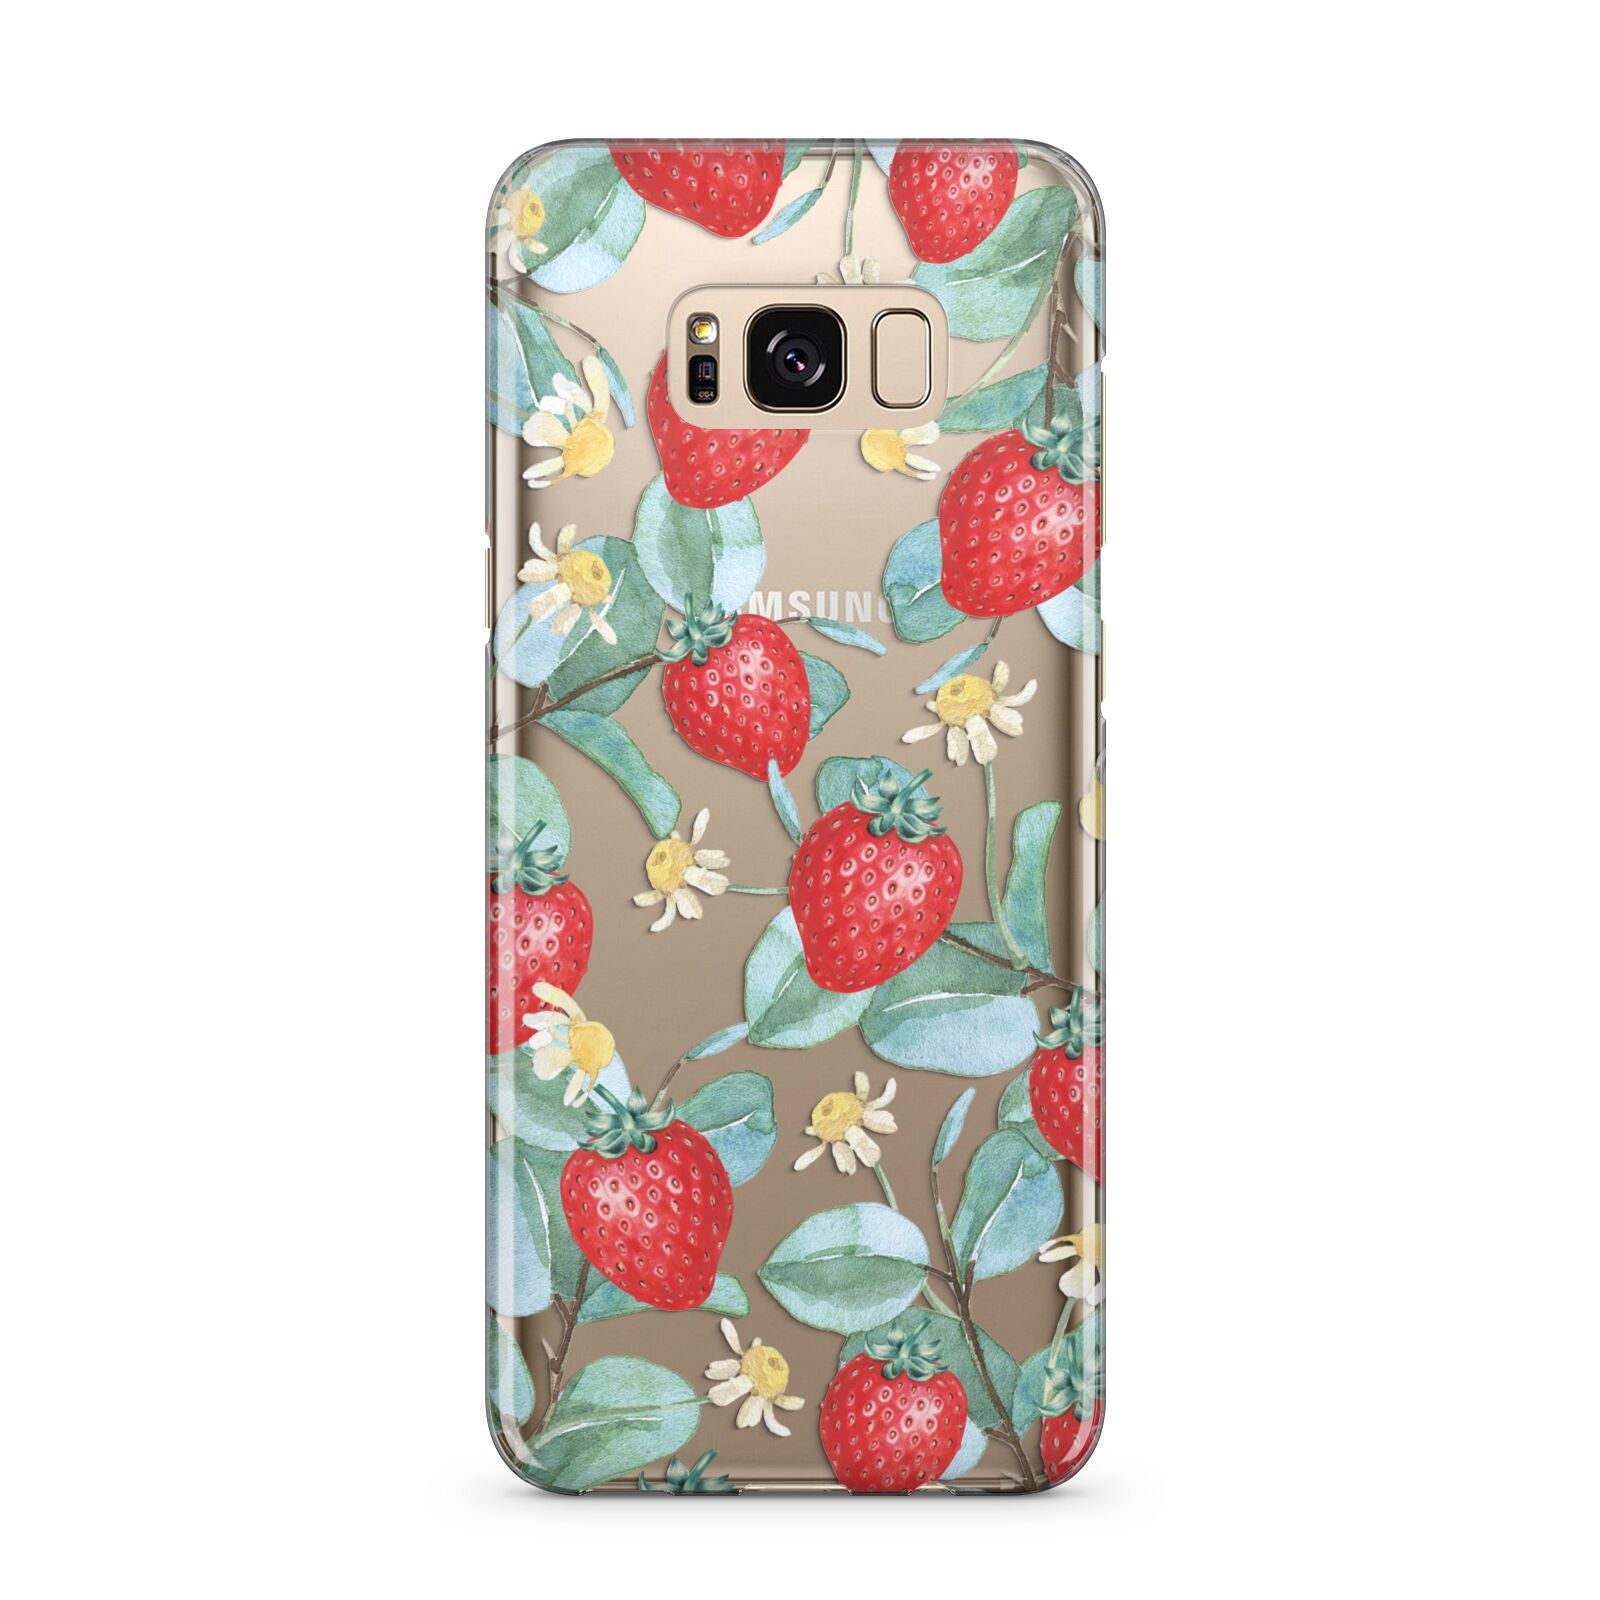 Strawberry Plant Samsung Galaxy S8 Plus Case